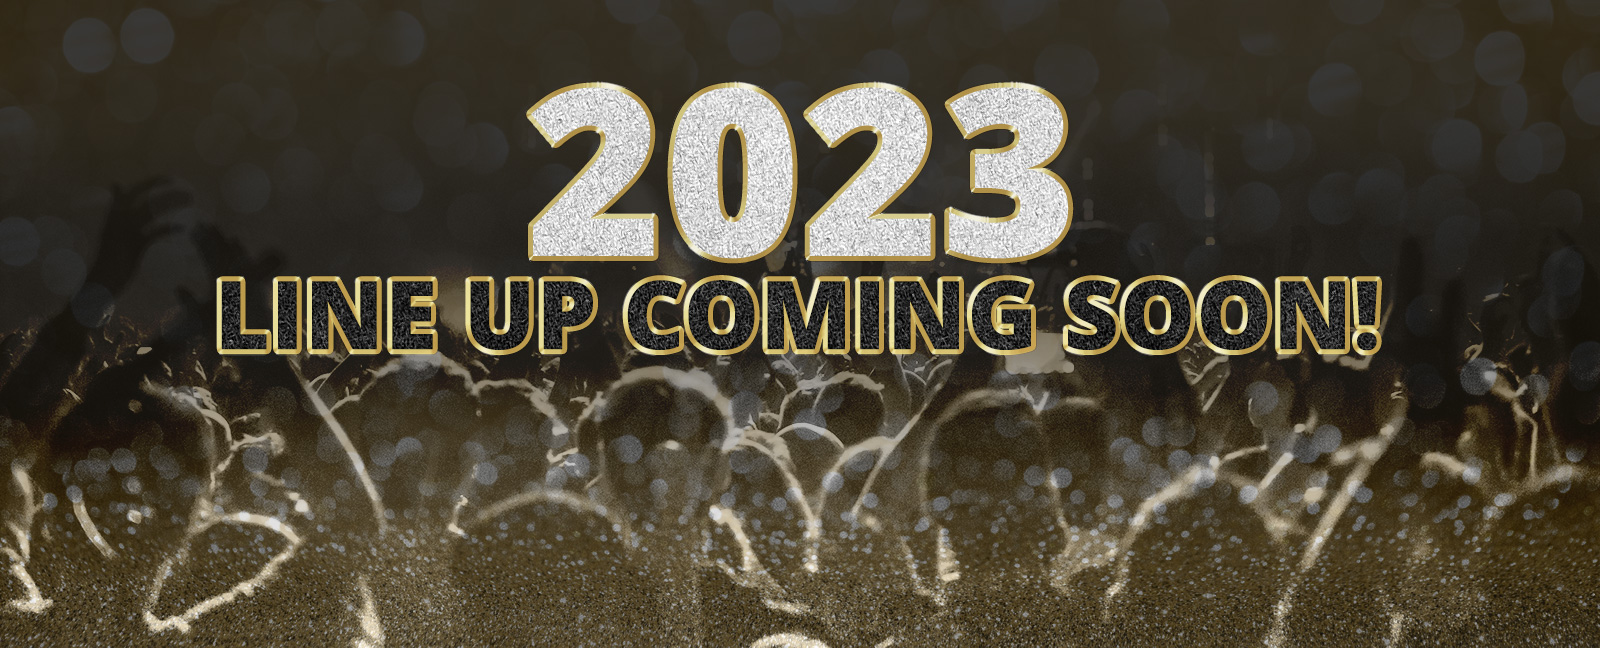 2023 headliners coming soon